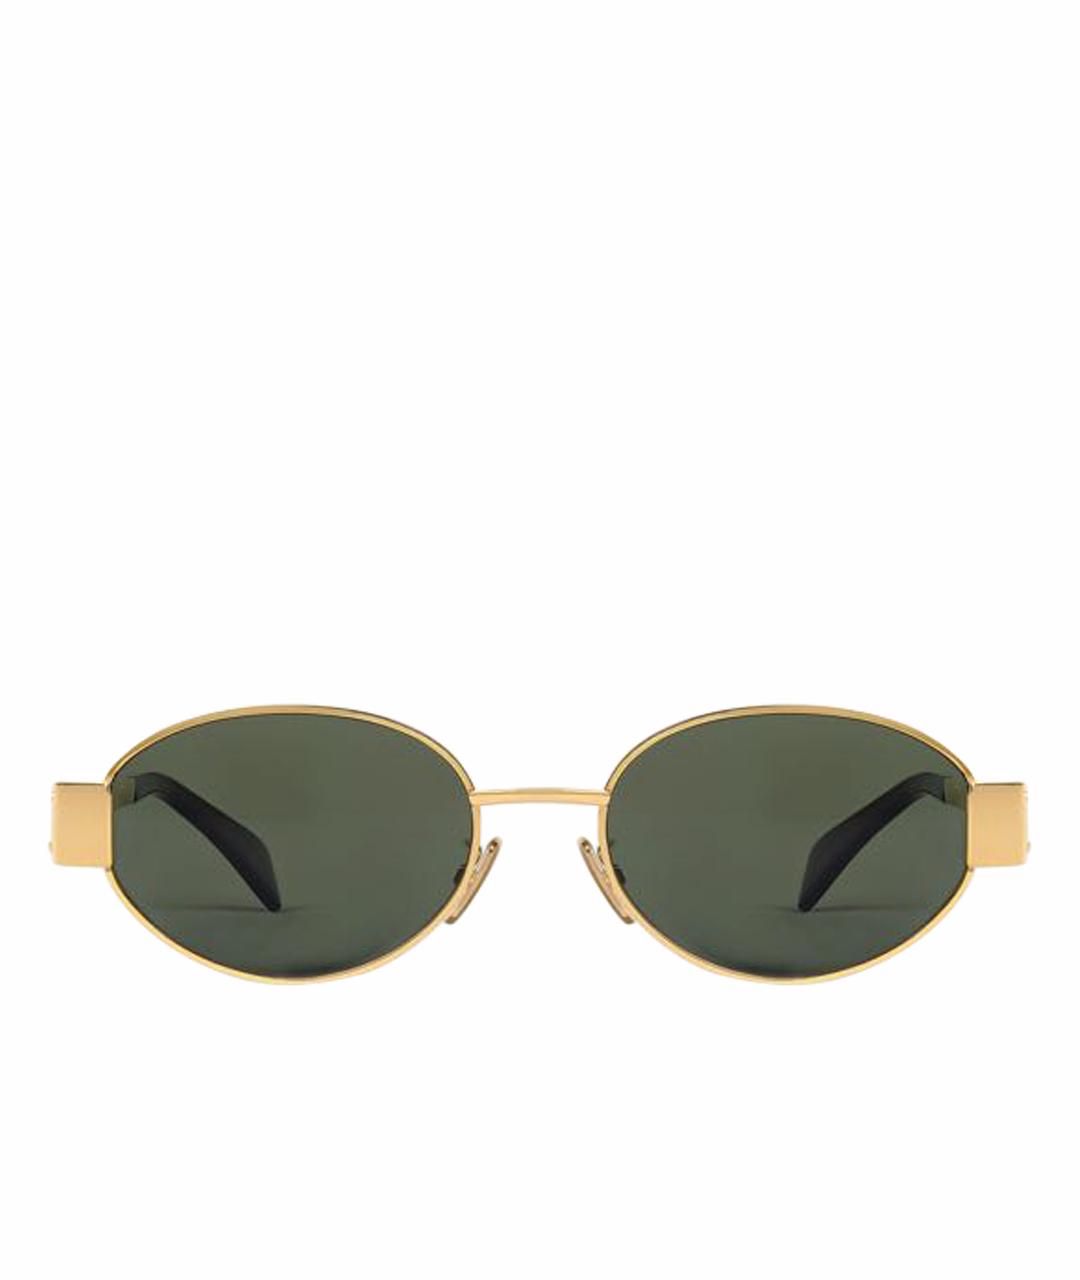 CELINE PRE-OWNED Золотые солнцезащитные очки, фото 1